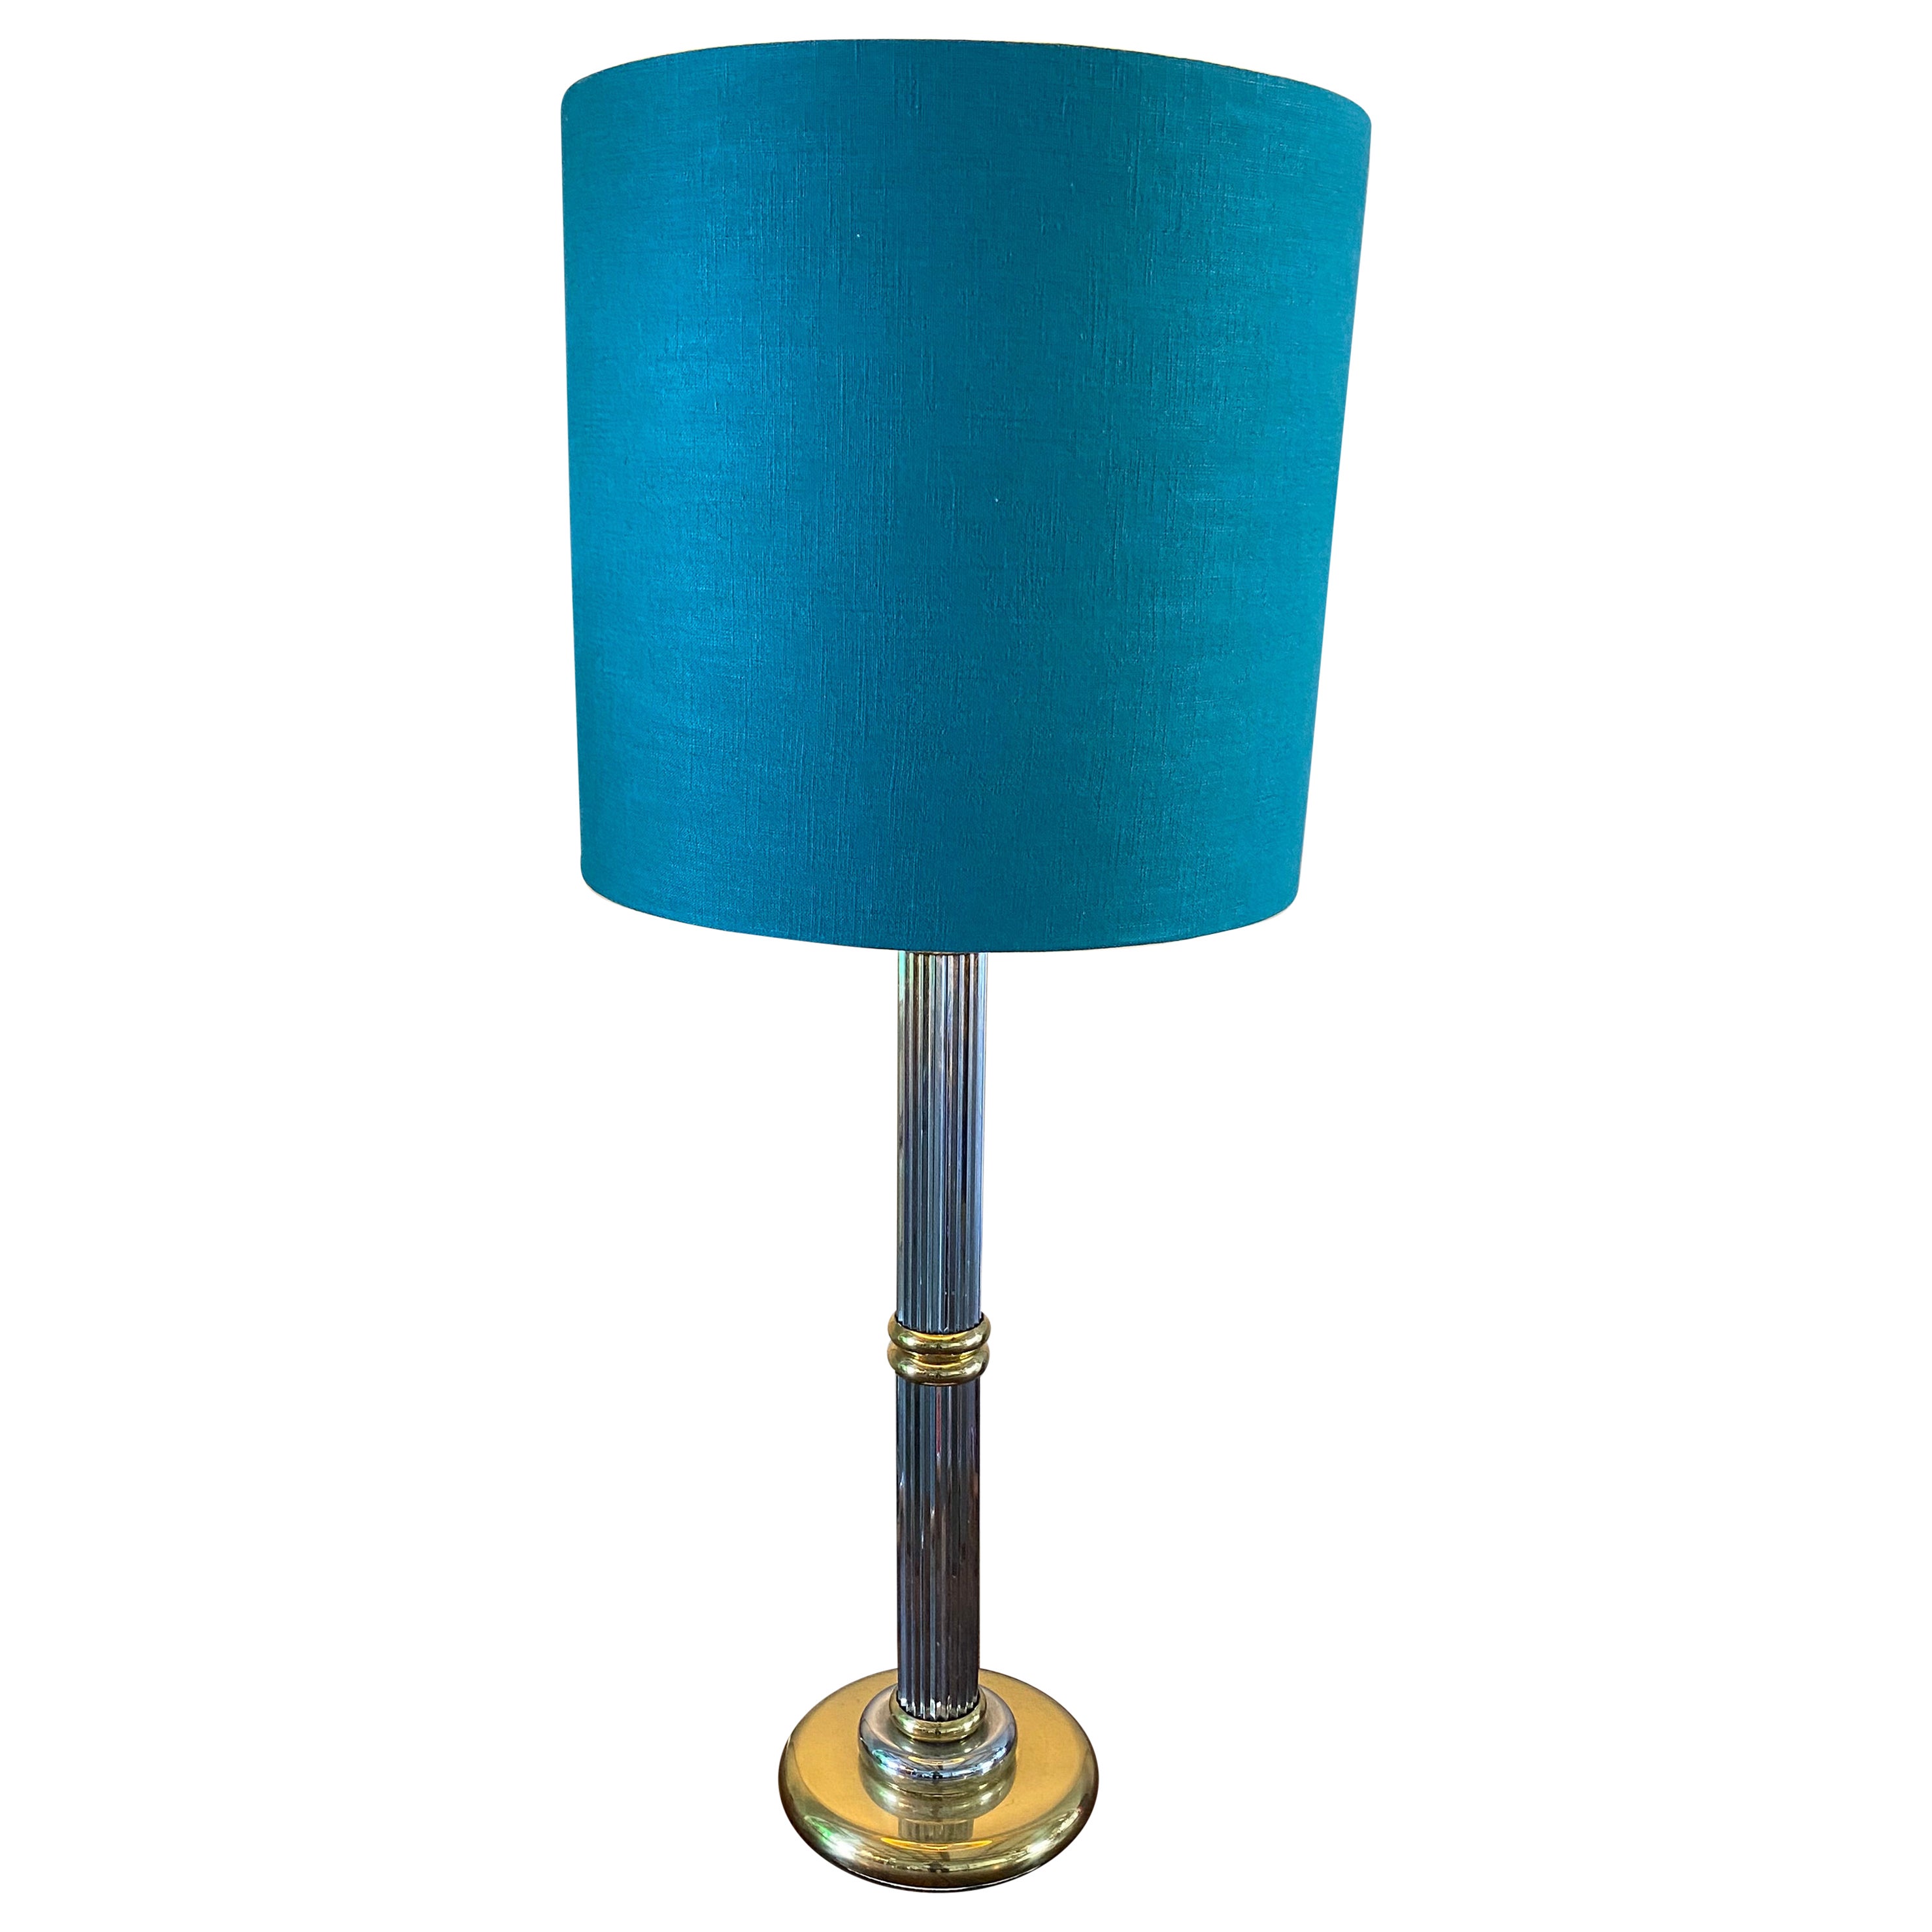 Große Tischlampe, zweifarbig, Hollywood-Regency-Stil, türkisfarbener Lampenschirm